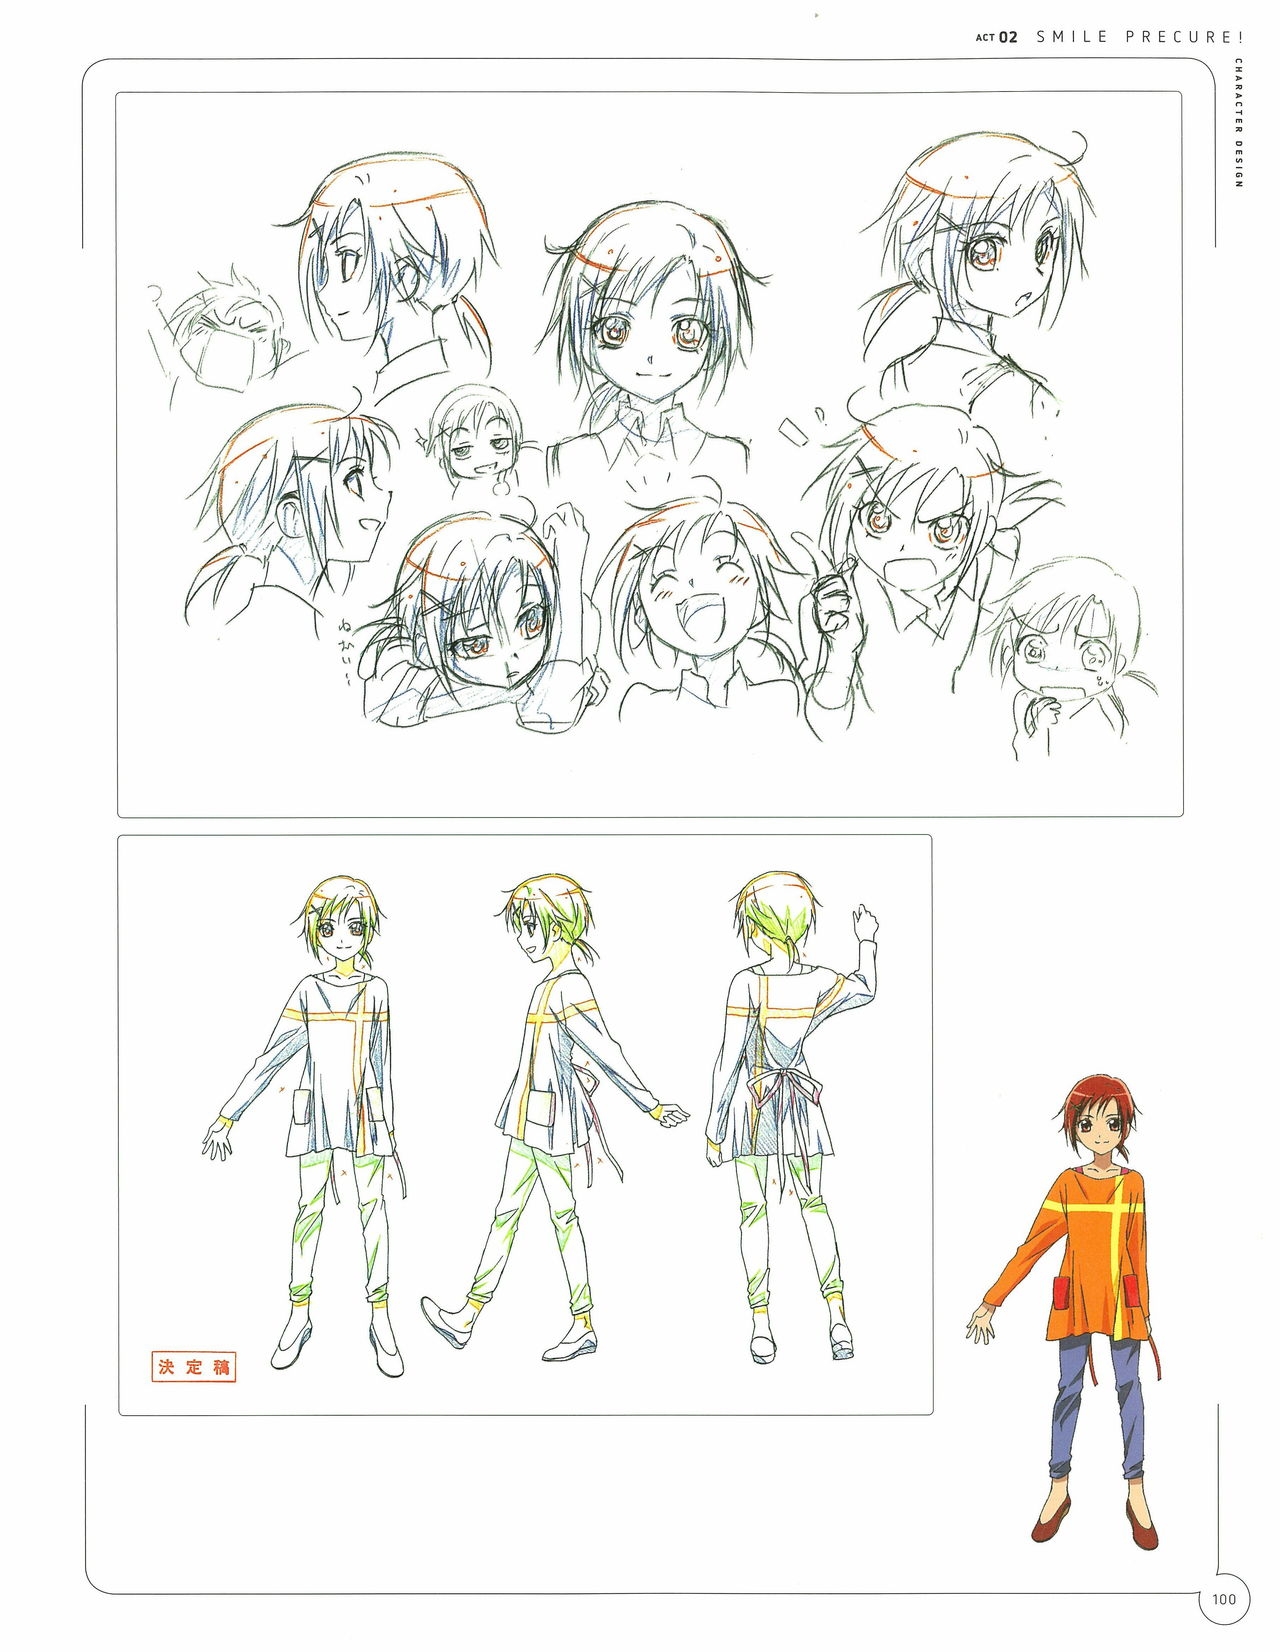 Kawamura Toshie - Toei Animation Precure Works 100